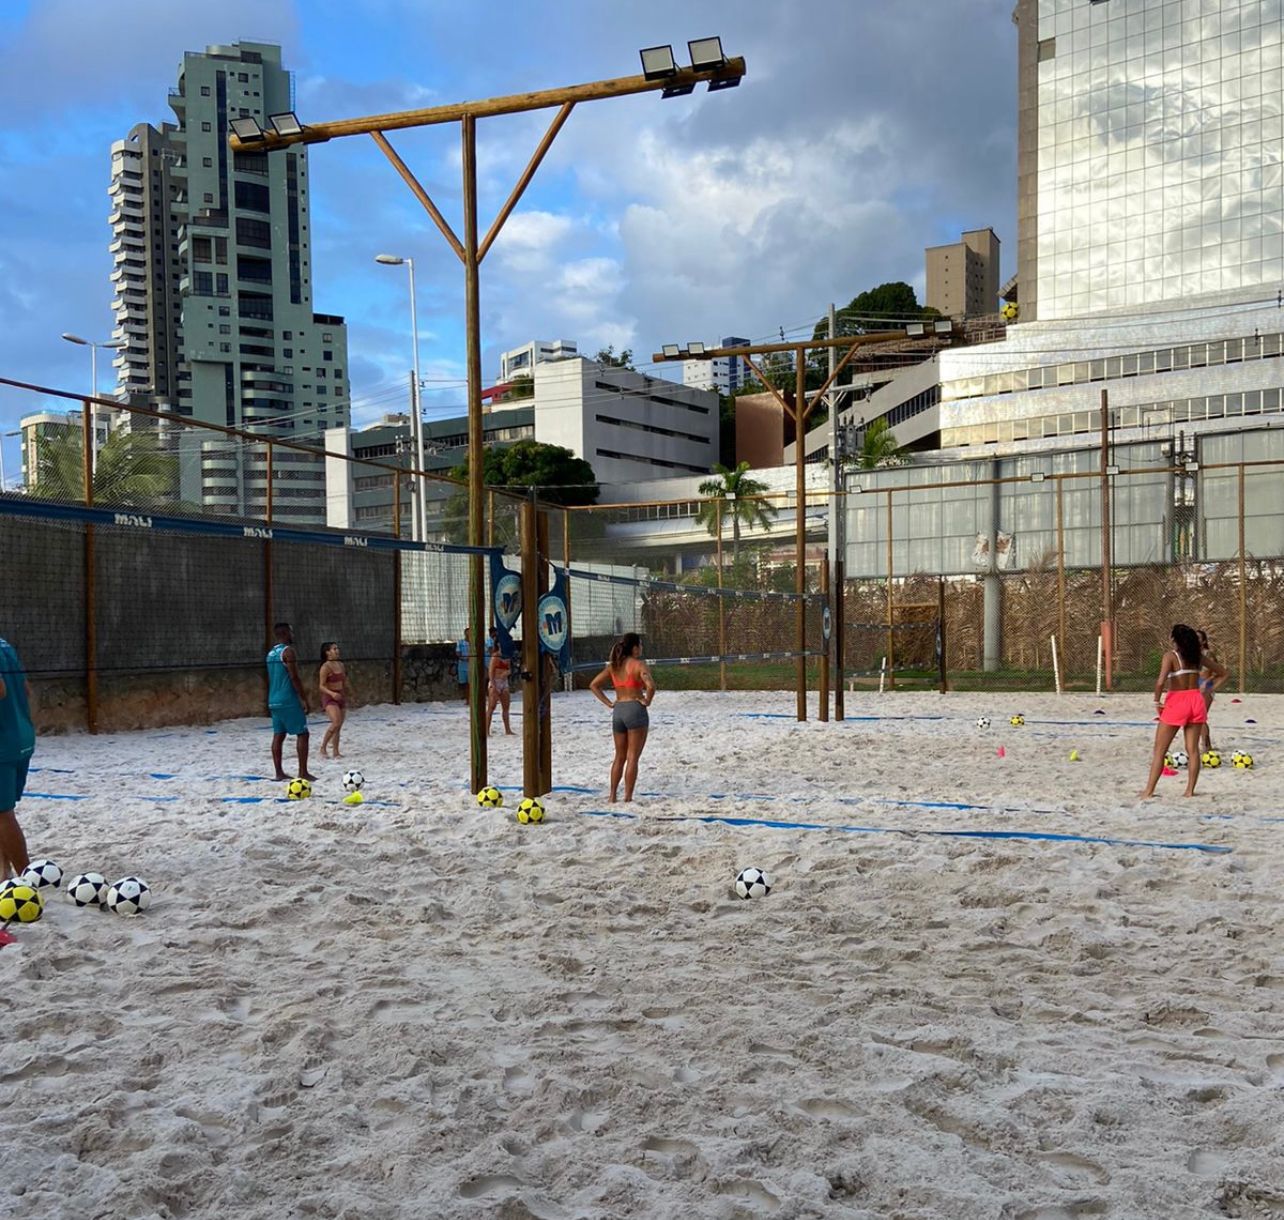  Salvador ganha empreendimento que une esportes de areia, bar e restaurante na Tancredo Neves  